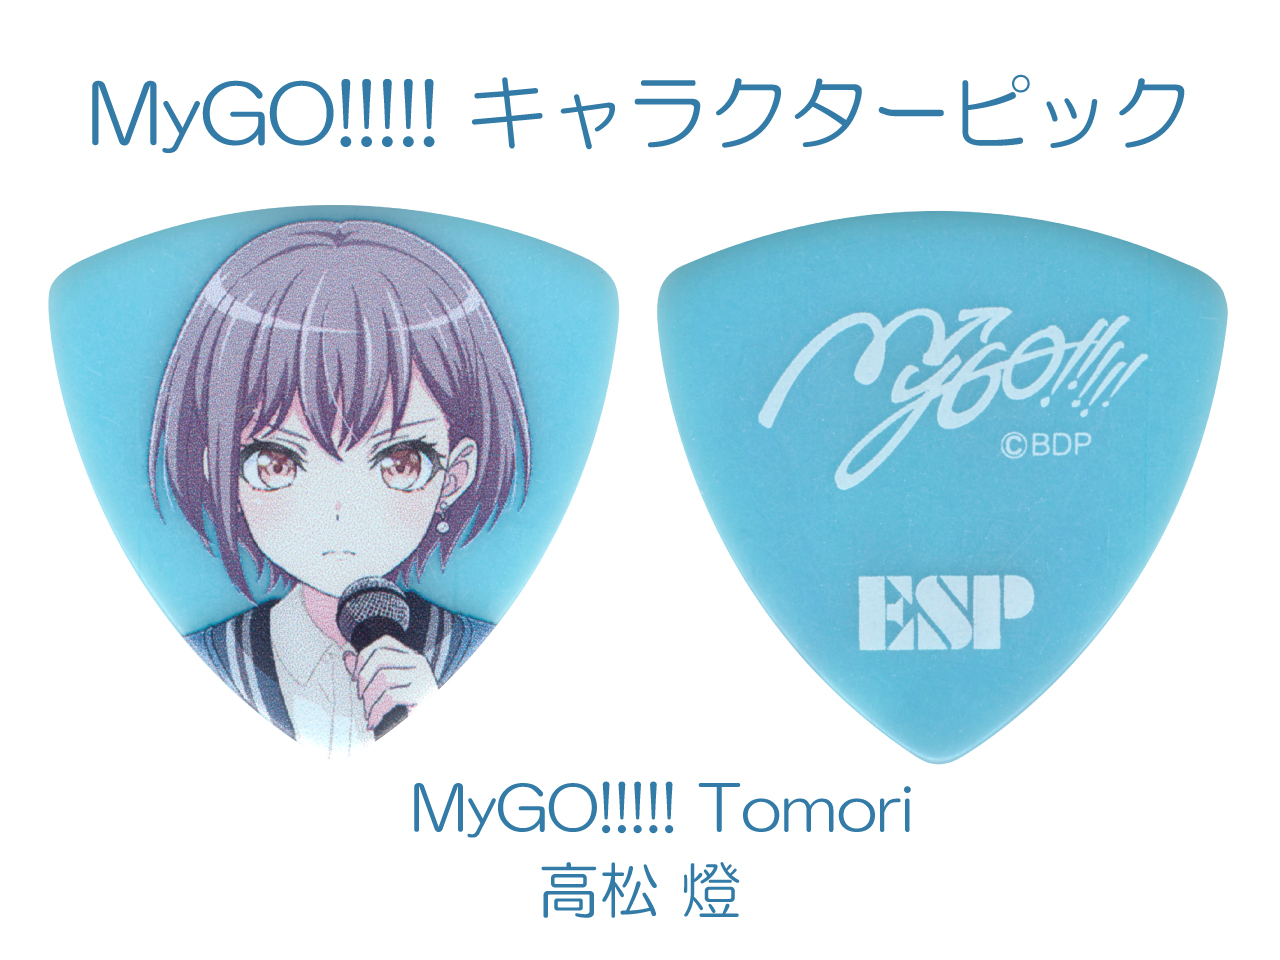 【ESP×BanG Dream!コラボピック】MyGO!!!!! キャラクターピック / MyGO!!!!! Tomori (高松 燈 モデル)